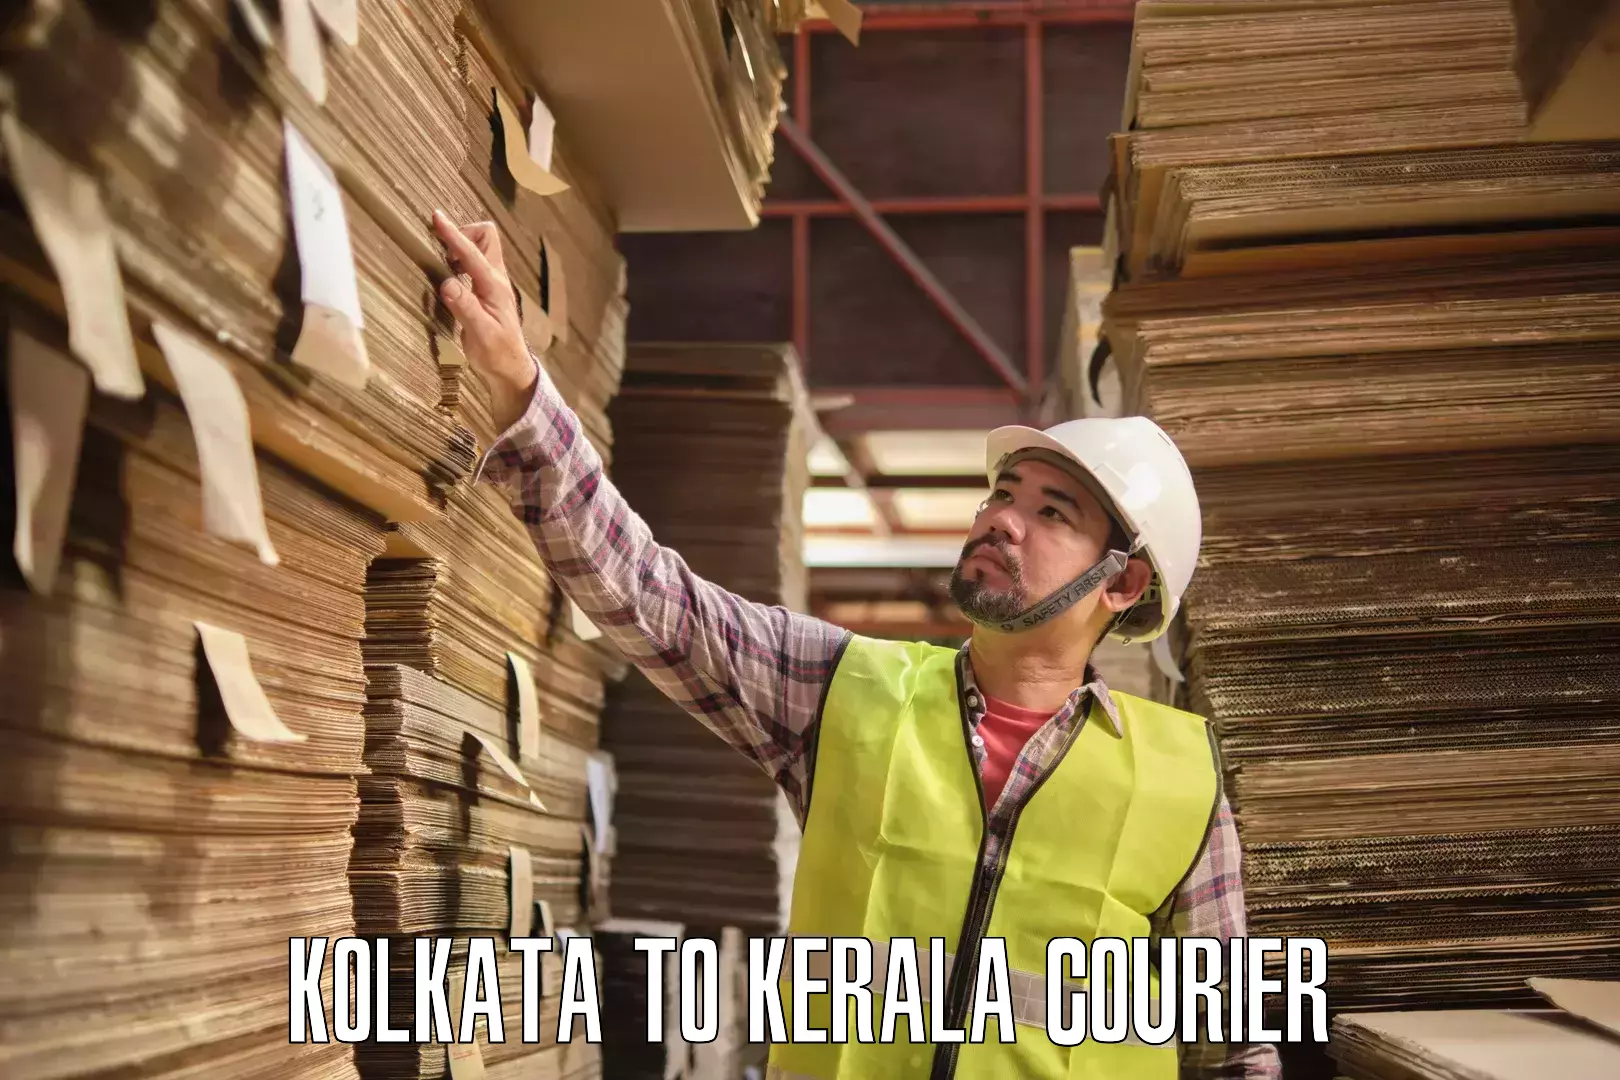 Express delivery capabilities in Kolkata to Kerala